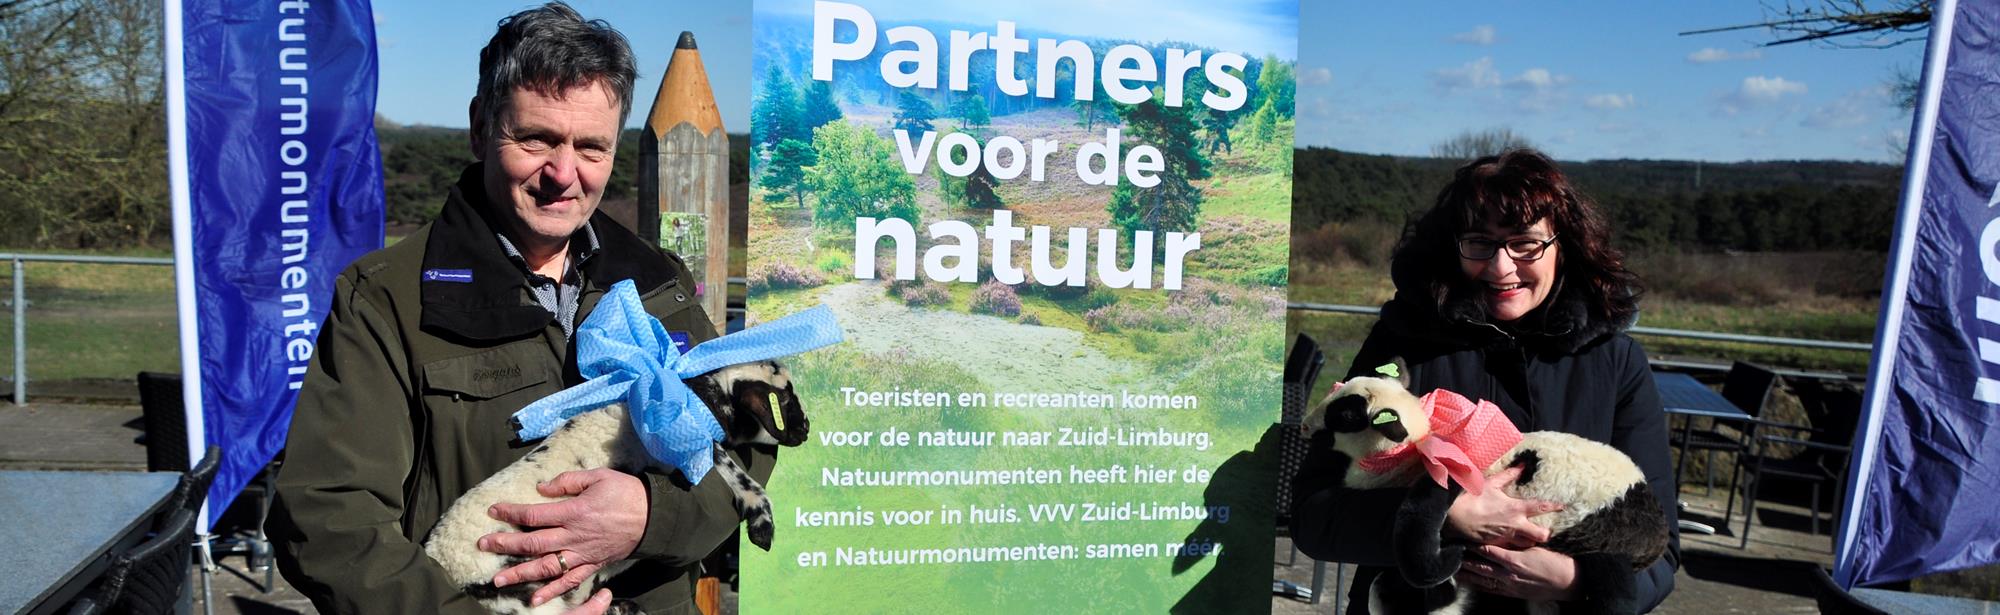 Natuurmonumenten en VVV Zuid-Limburg vieren lente